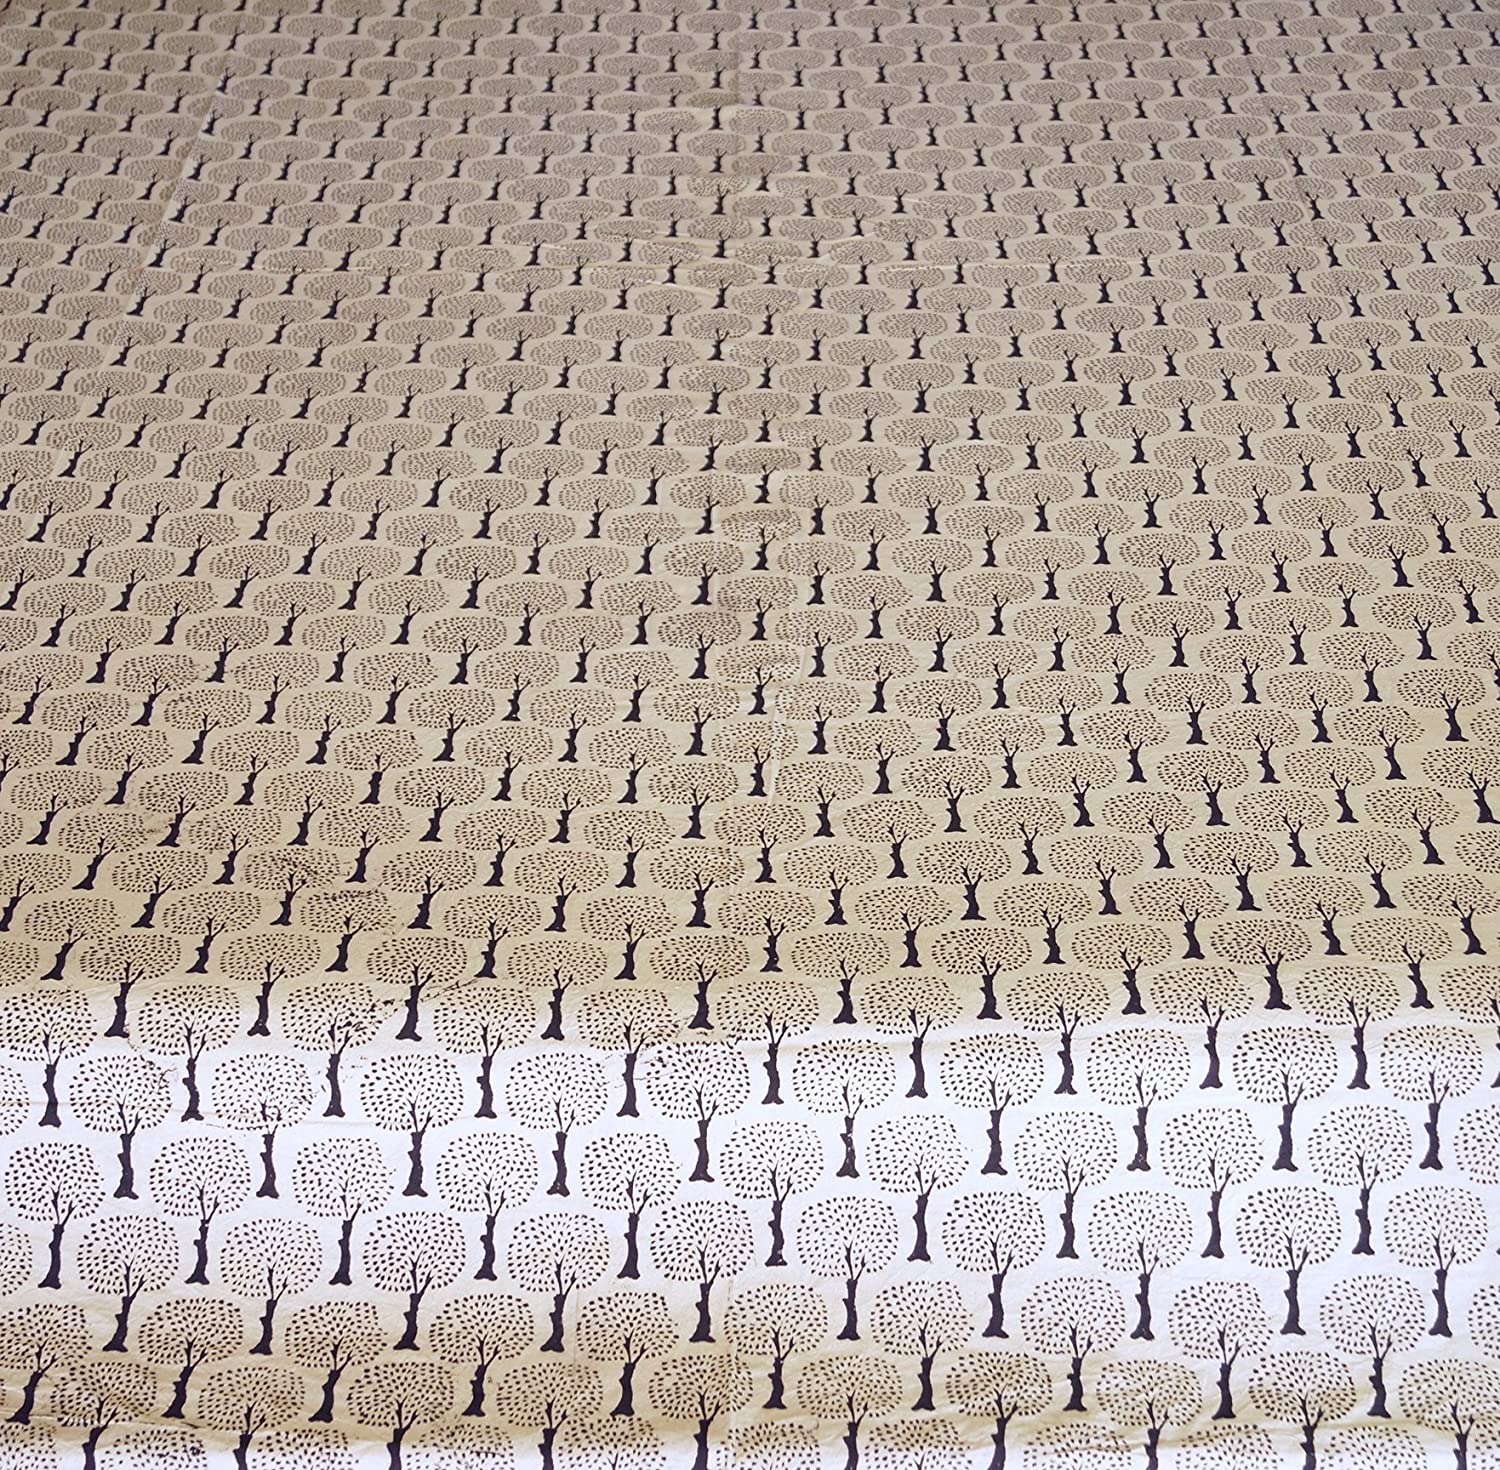 GURU SHOP Block Print Bedspread, Bed & Sofa Throw, Handmade Wall Hanging, Wall Towel, Design 11, Beige, Cotton, Size: Single 150 x 200 cm, Bedspreads with Block Print